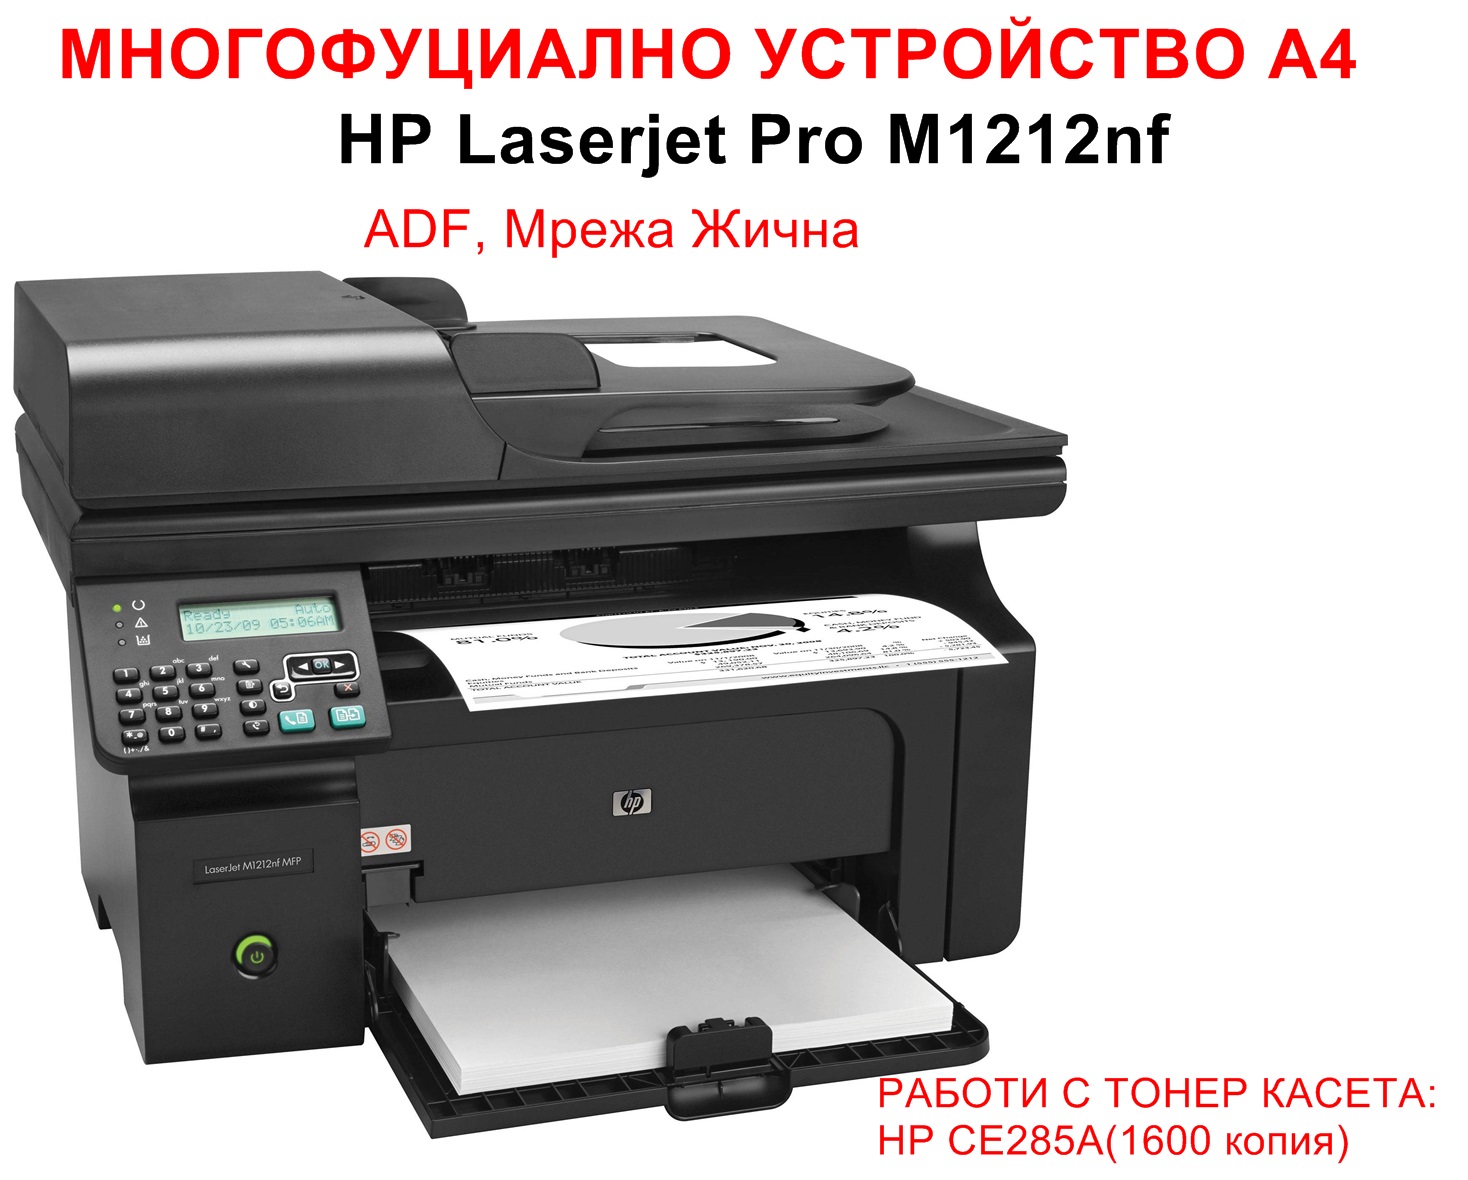 All-in-One Printer HP Laserjet Pro M1212nf